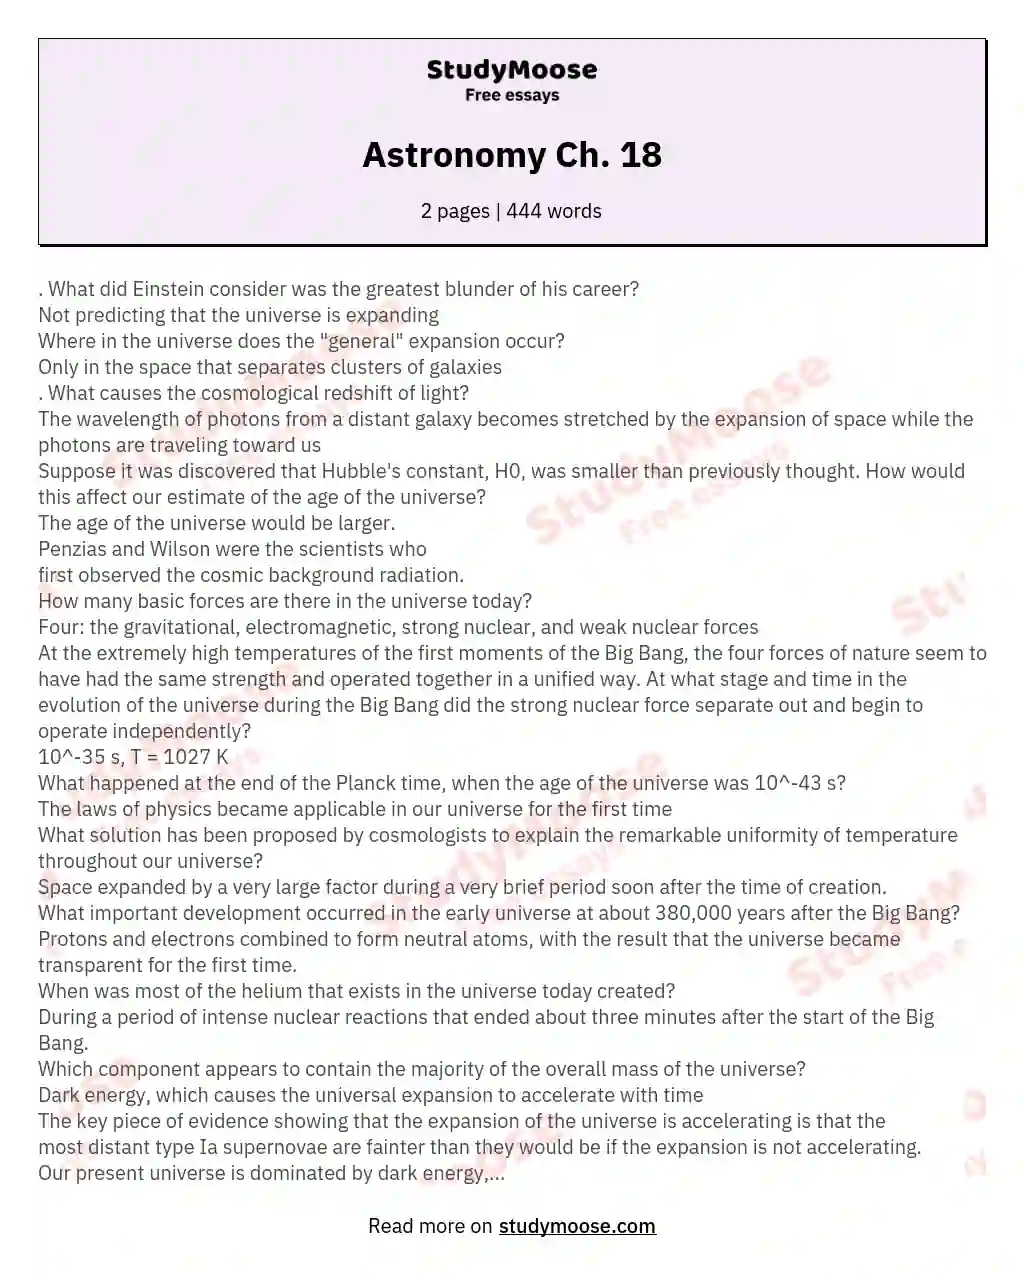 Astronomy Ch. 18 essay